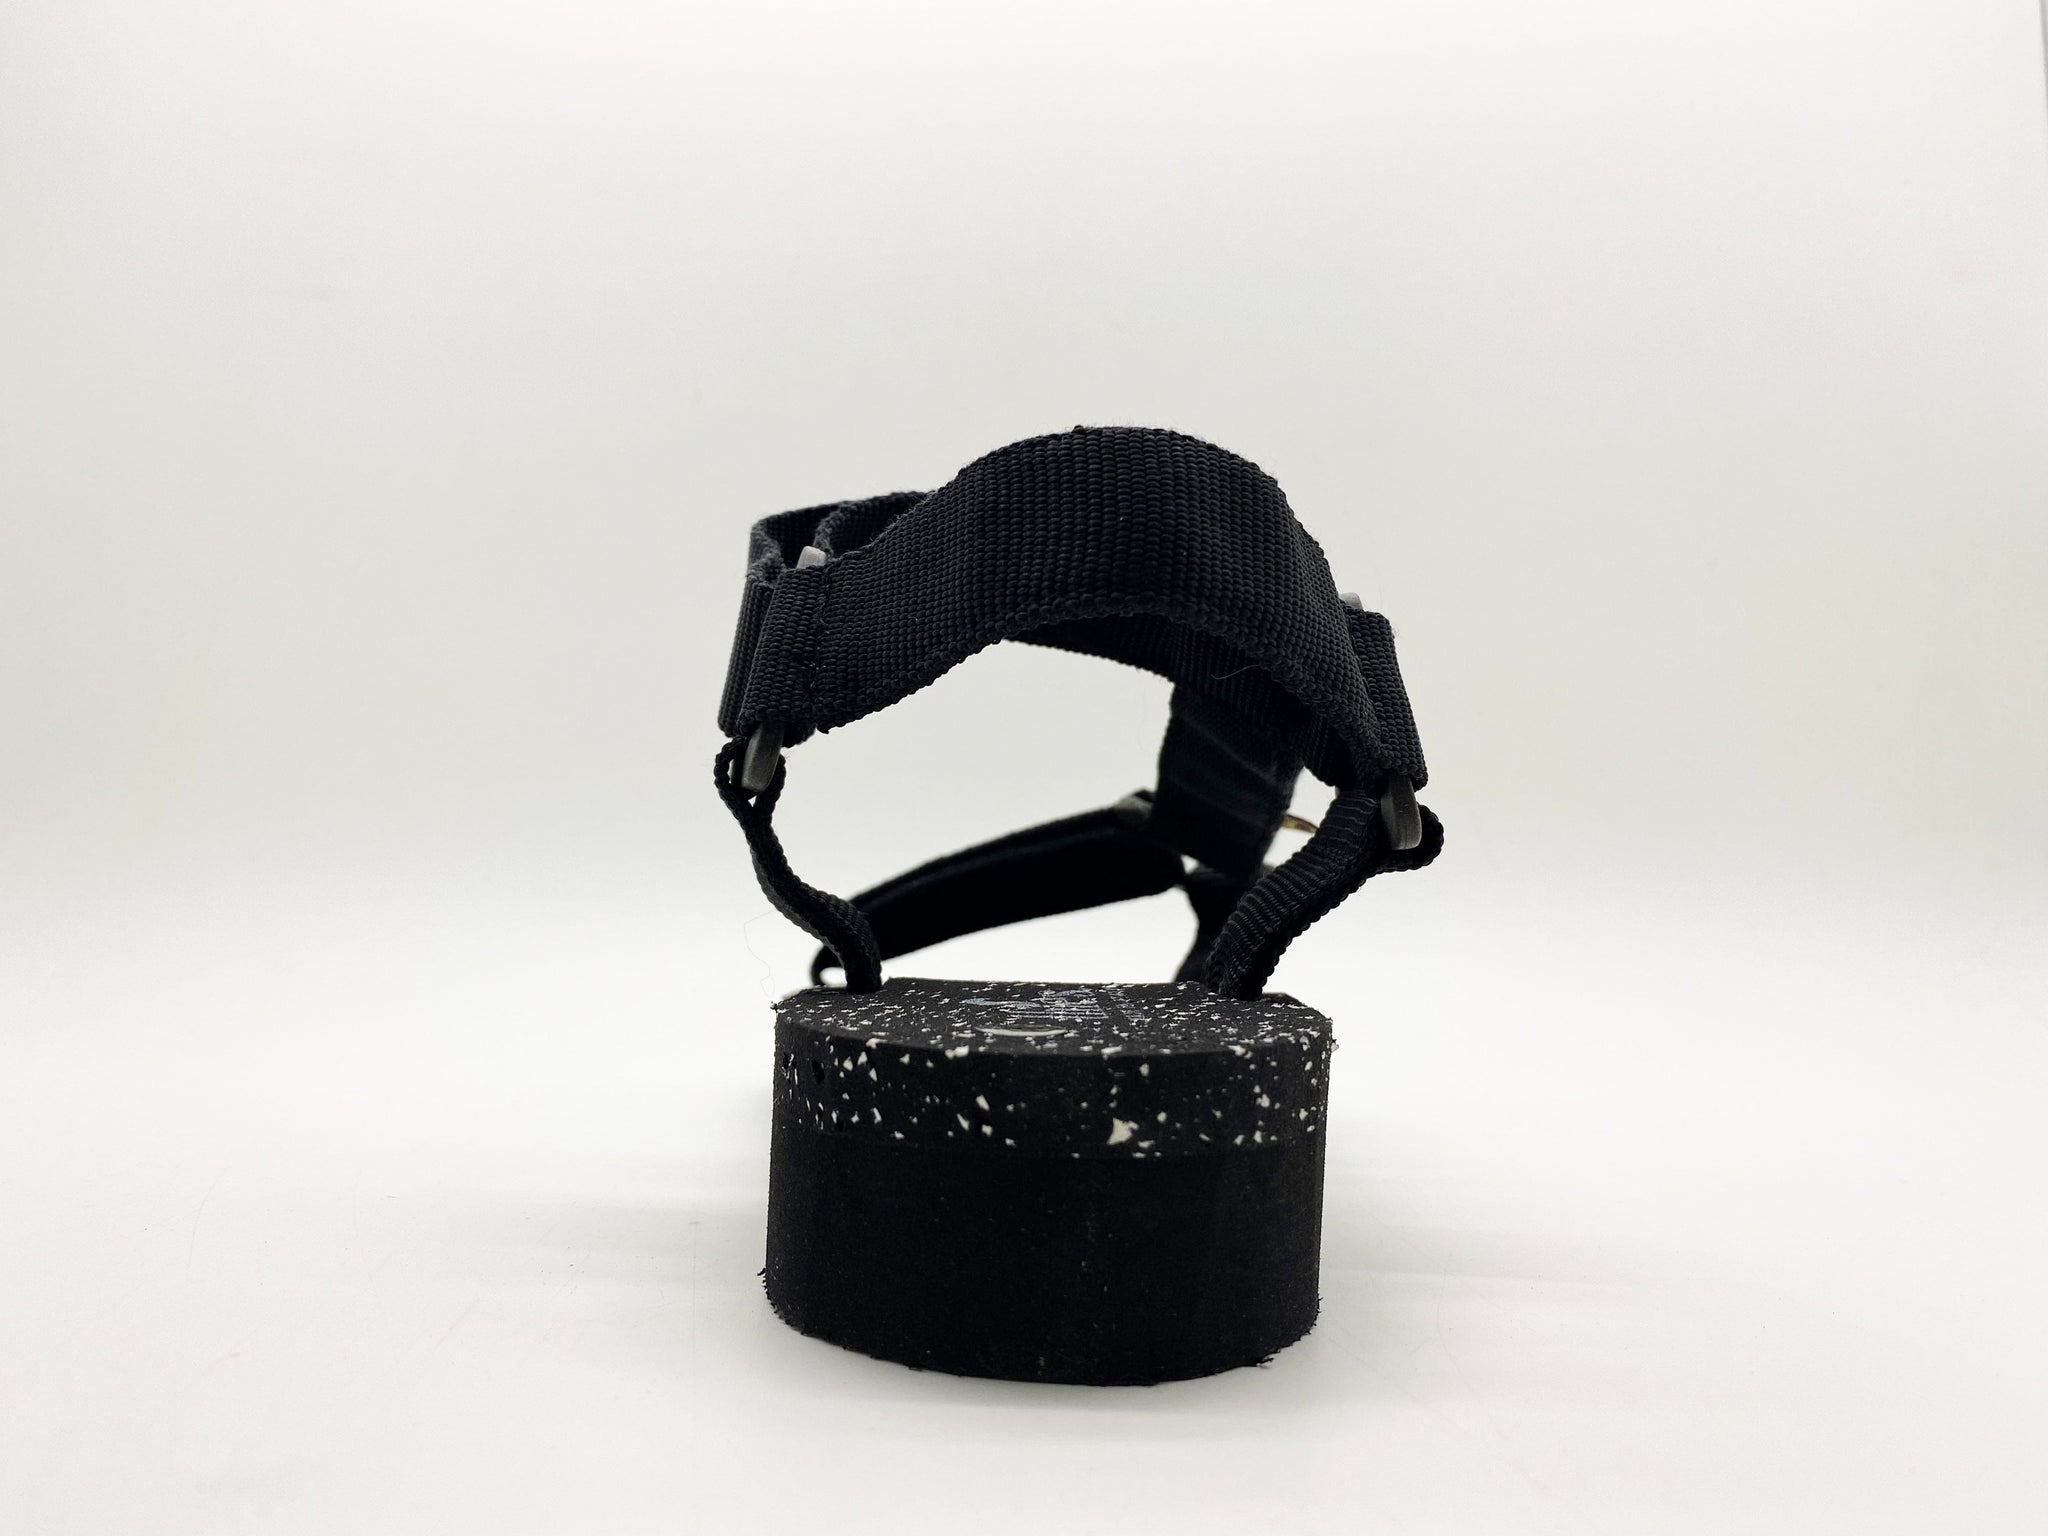 Calzado NAT 2 41 / negro / PES reciclado thies 1856 ® Eco Trek vegan black (W/X) moda sostenible moda ética